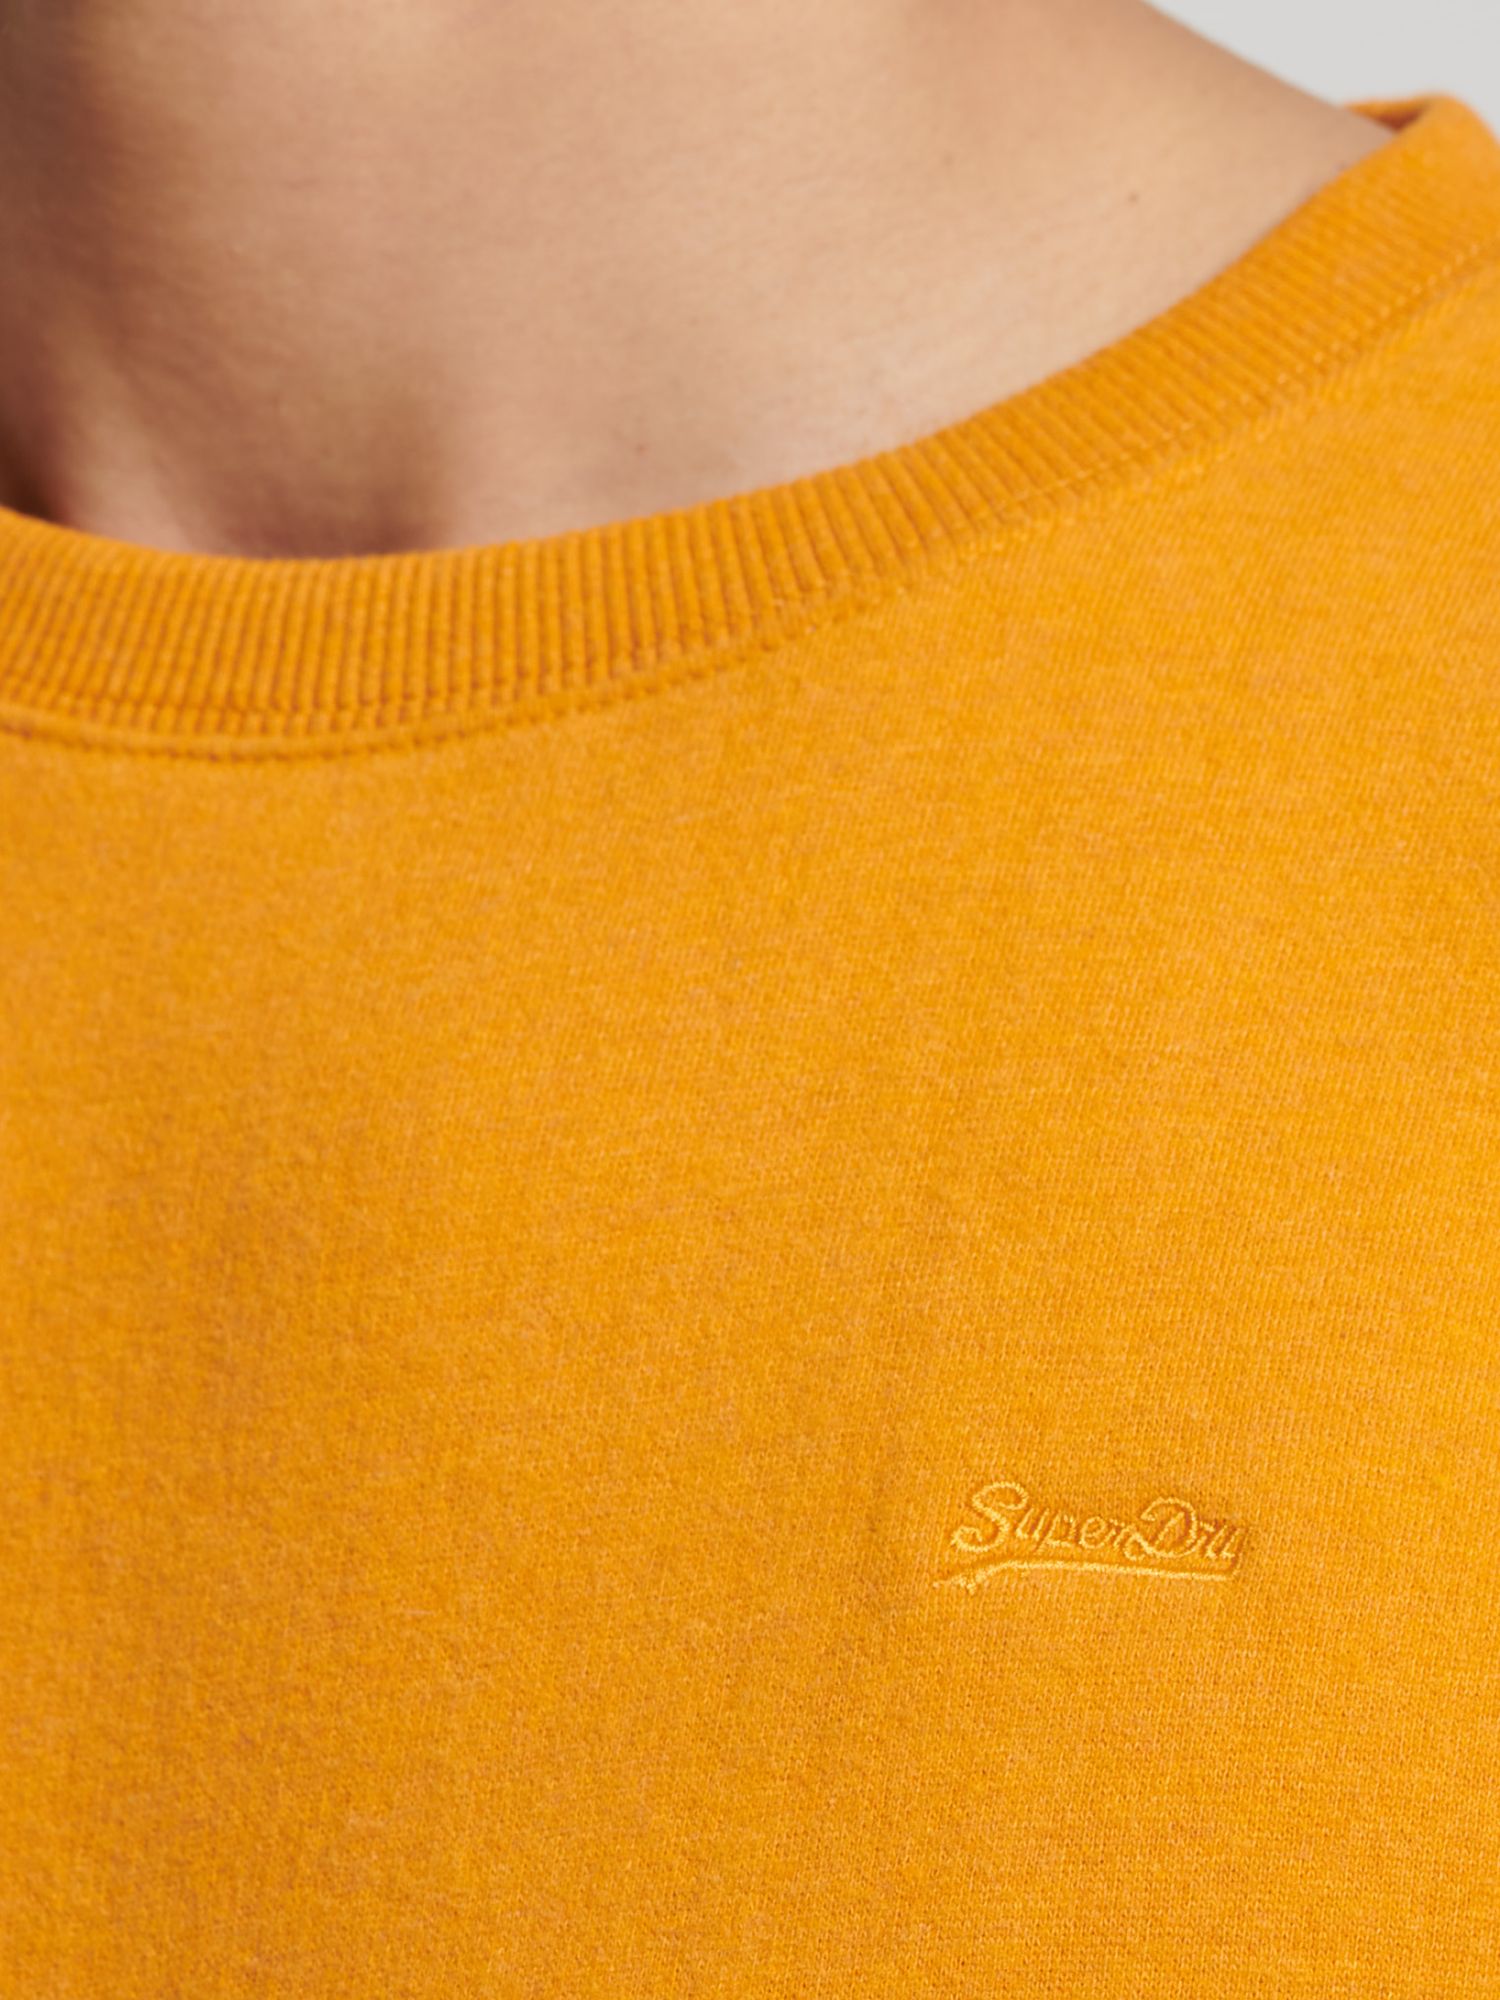 Superdry Vintage Logo Embroidered Crew Sweatshirt, Thrift Gold Marl, S